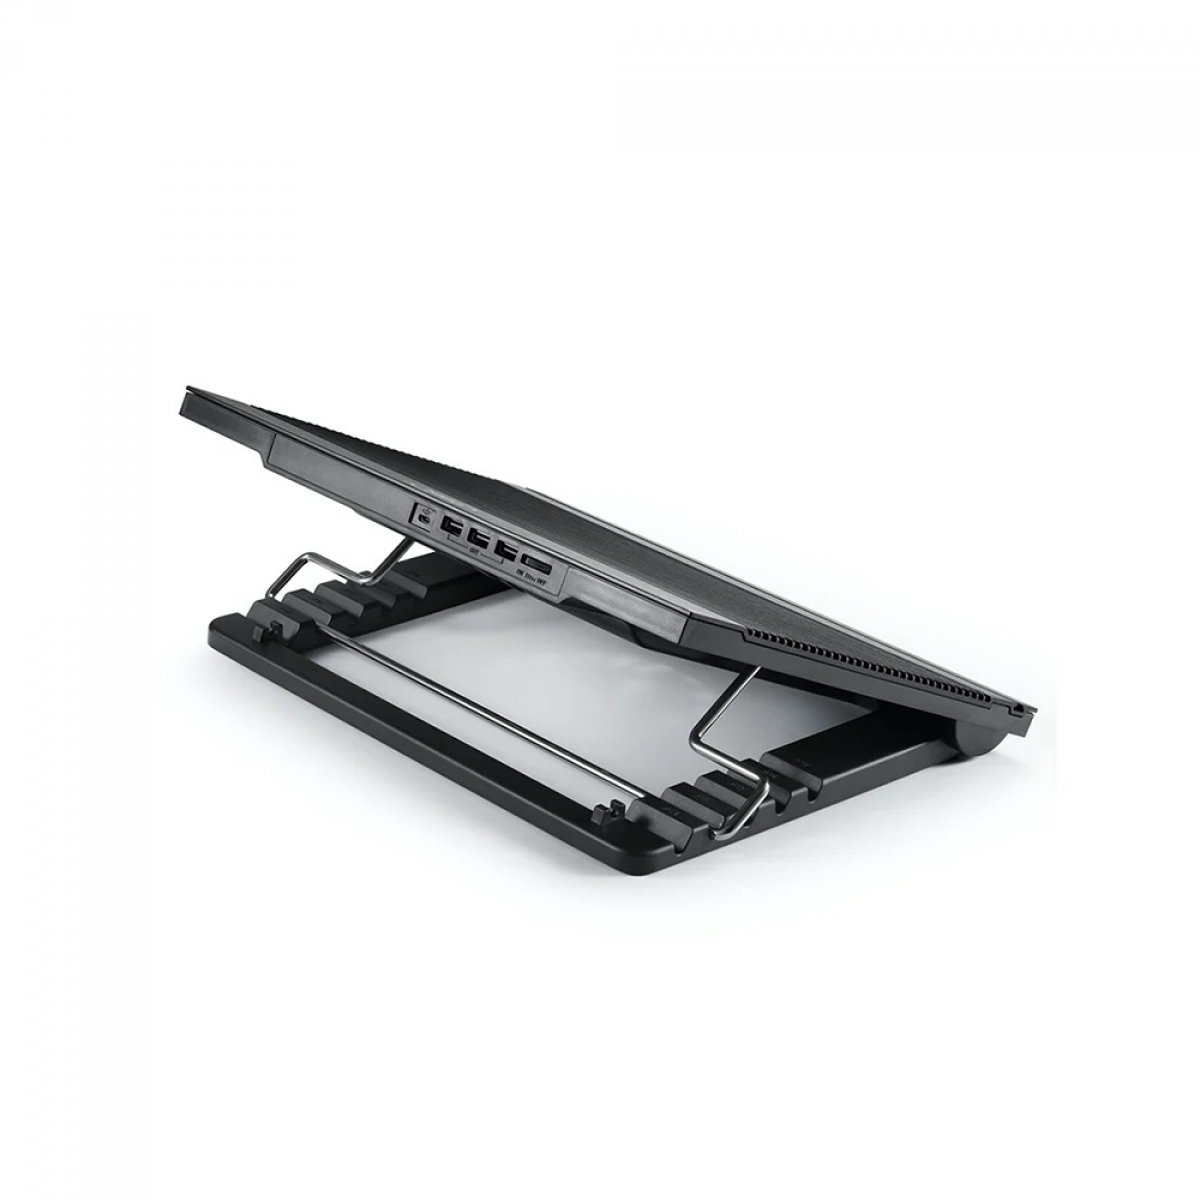 Suporte para Notebook DeepCool N9 Black, Ajustável, Com 1 Fan, DP-N146-N9BKL